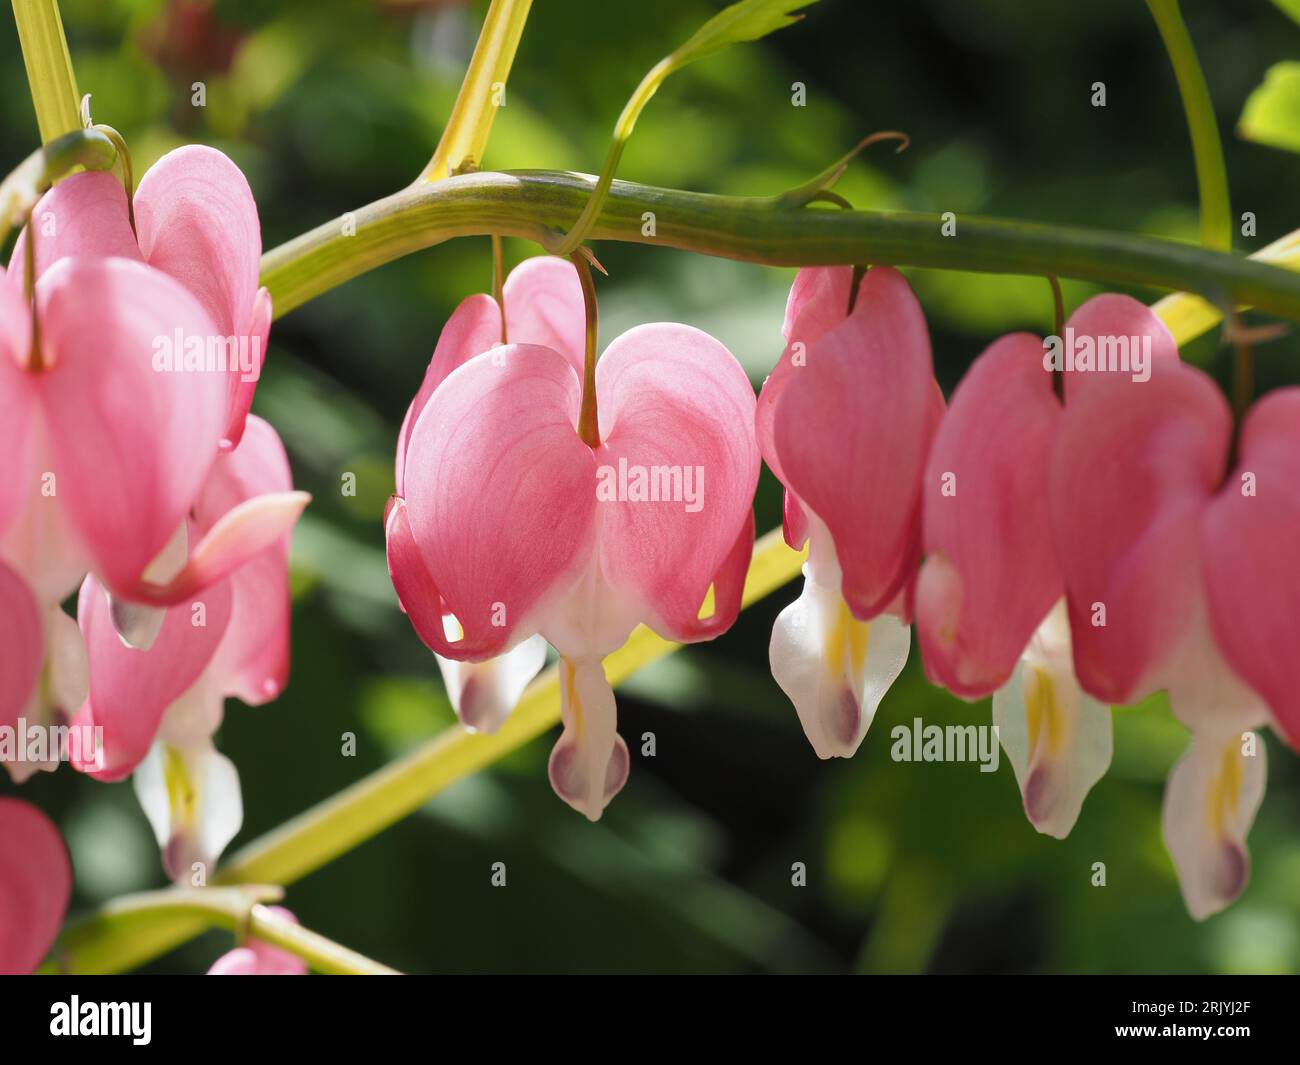 Asian Bleeding Heart. Scientific name: Lamprocapnos. Family: Papaveraceae. Order: Ranunculales. Kingdom: Plantae. Stock Photo